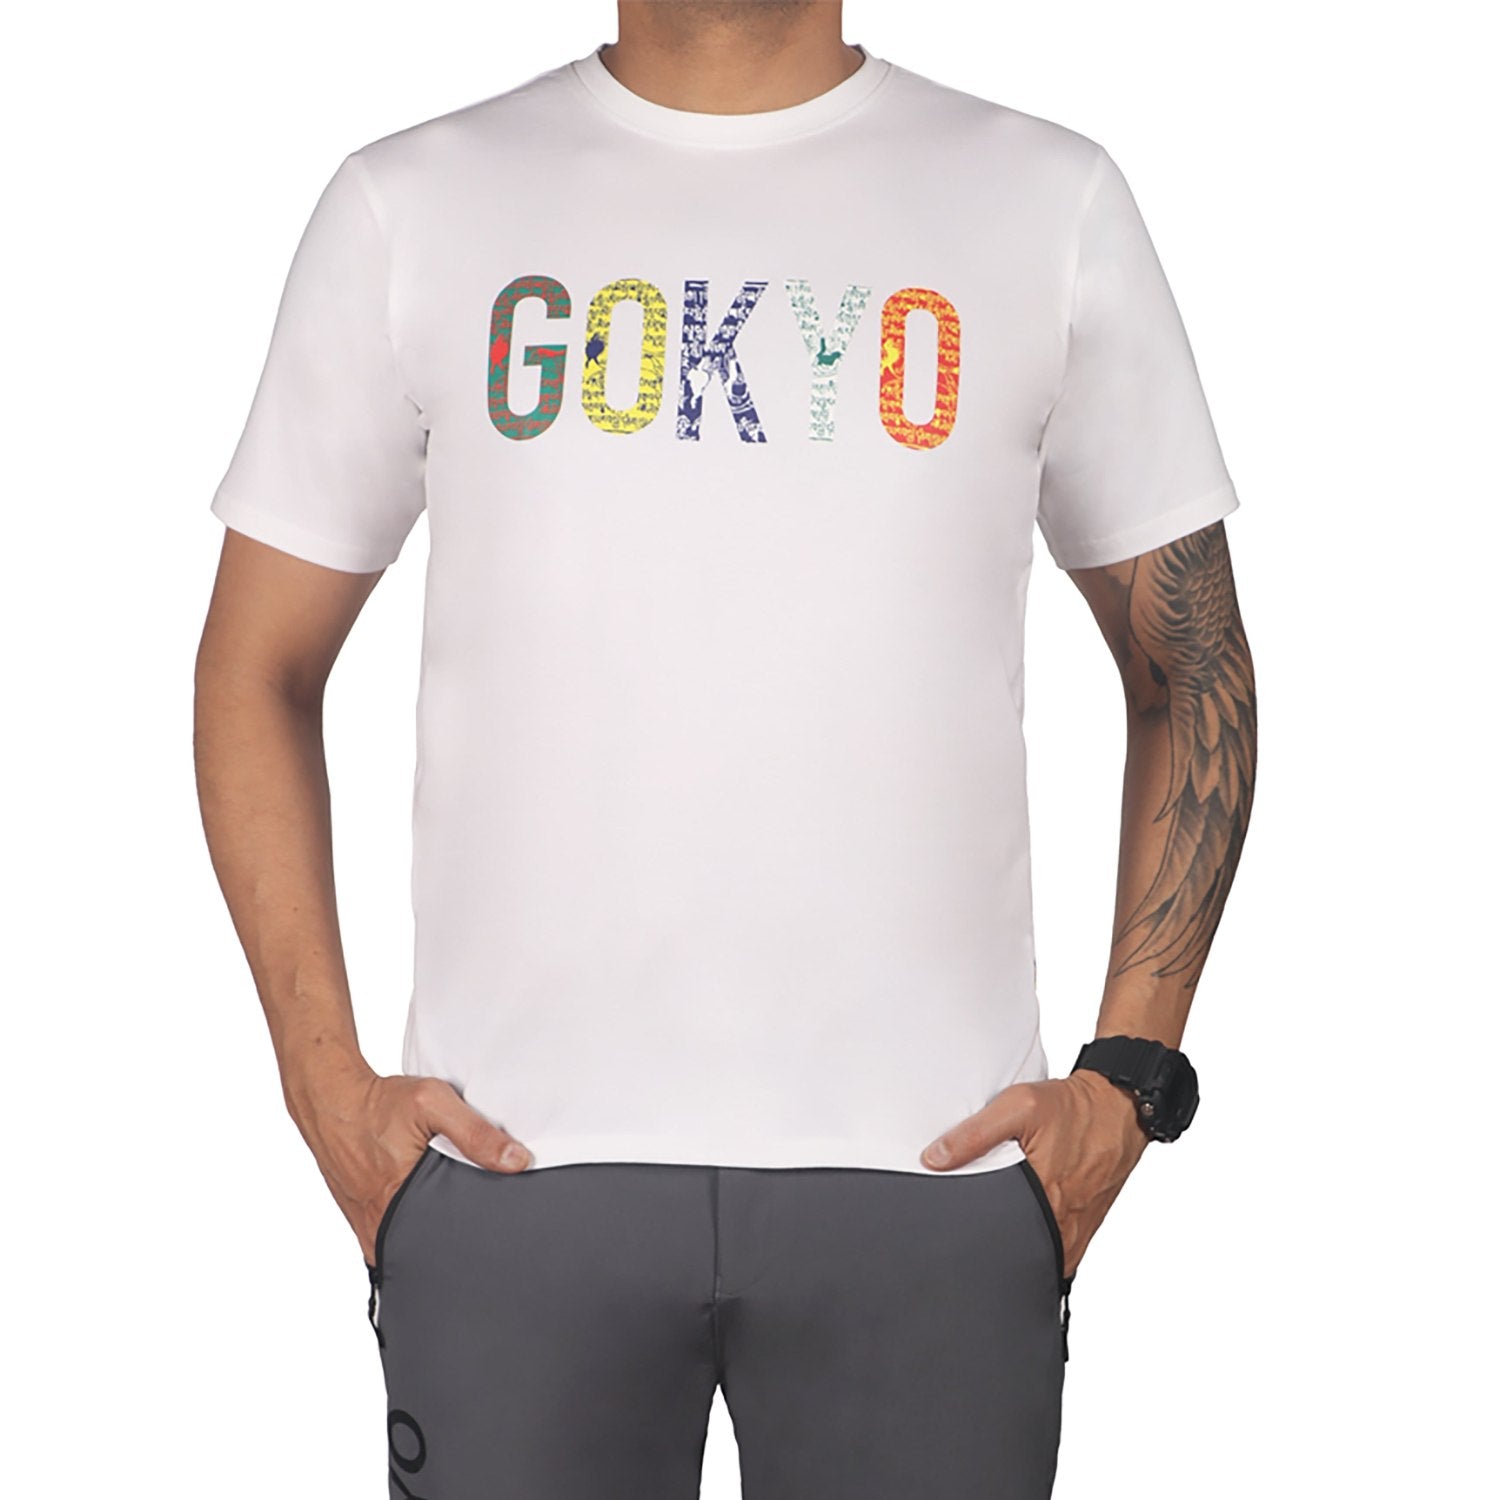 Buy GOKYO Originals Tshirt - Flag White at Gokyo Outdoor Clothing & Gear